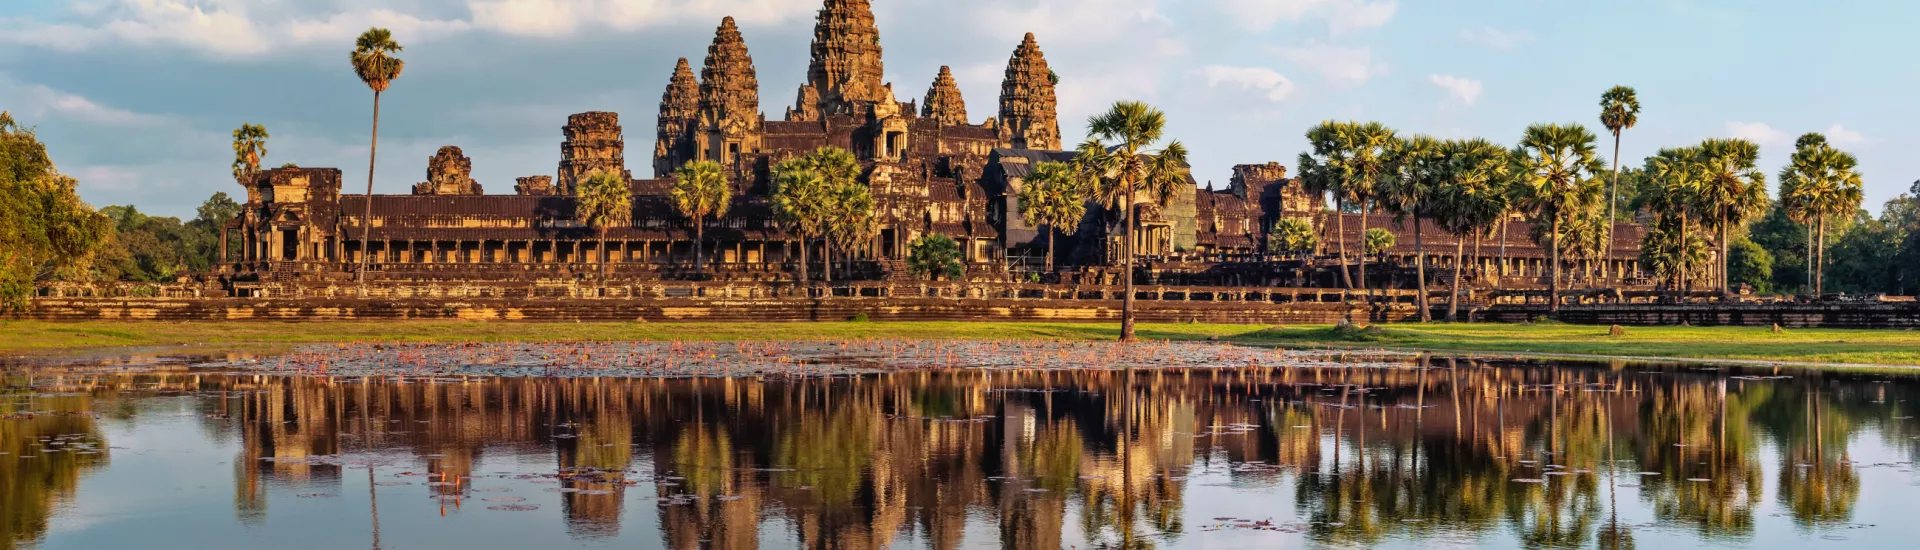 Angkor Wat Temple Complex, Cambodia